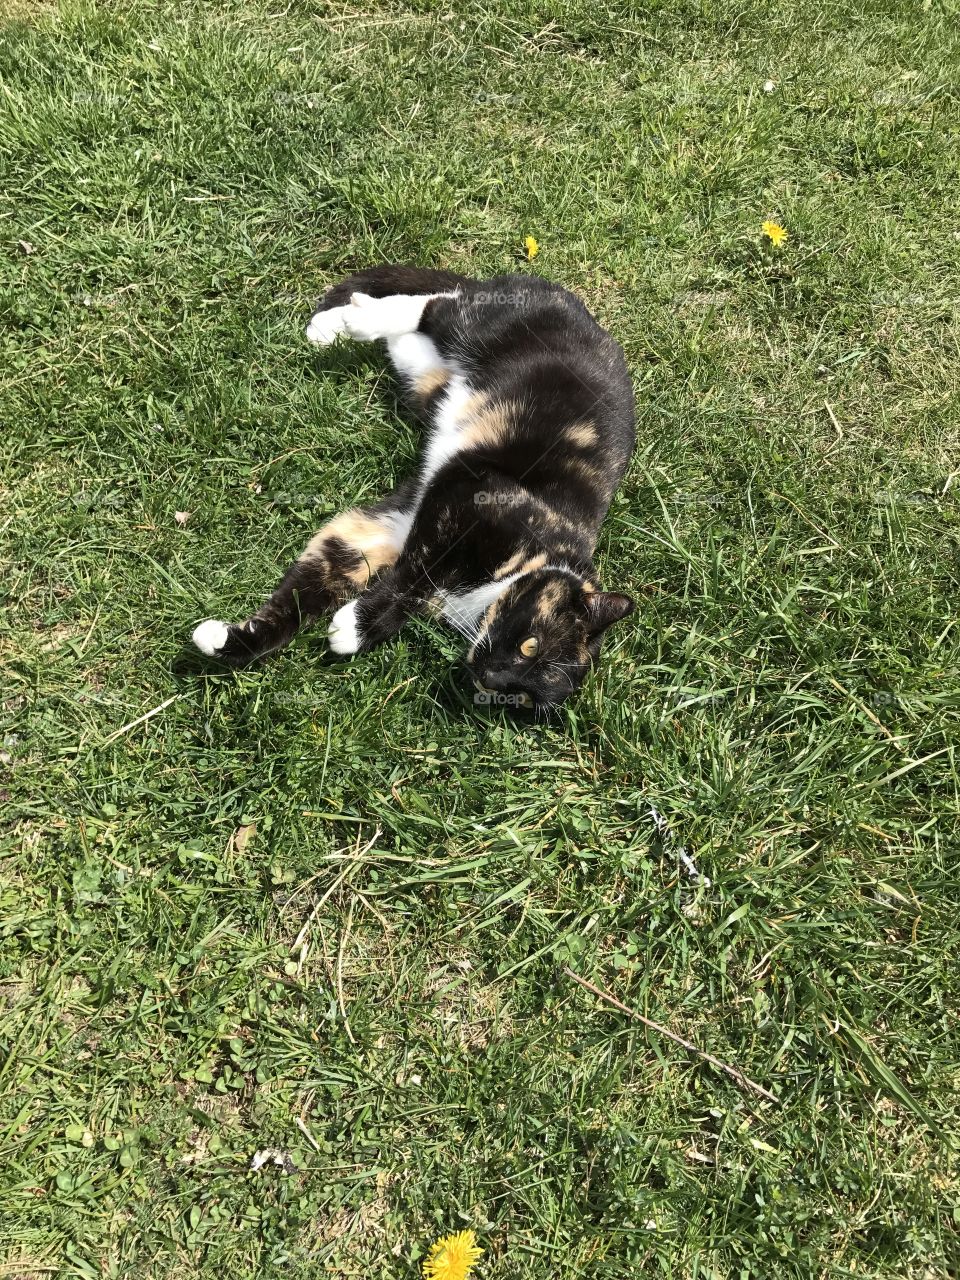 Cat at lawn